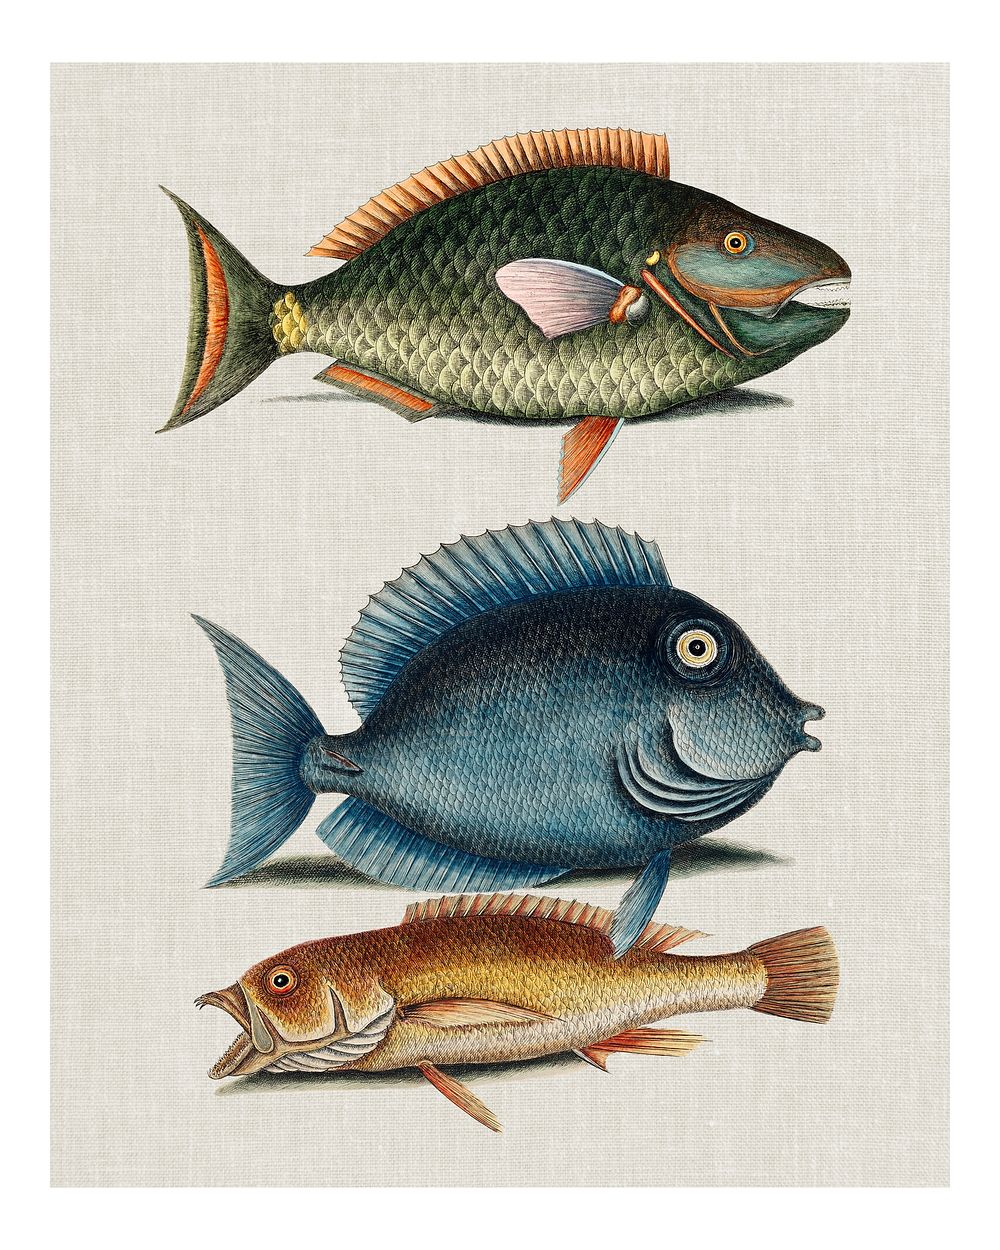 Vintage Parrot Fish, Tang fish, and Yellow Fish remix wall art print and poster.